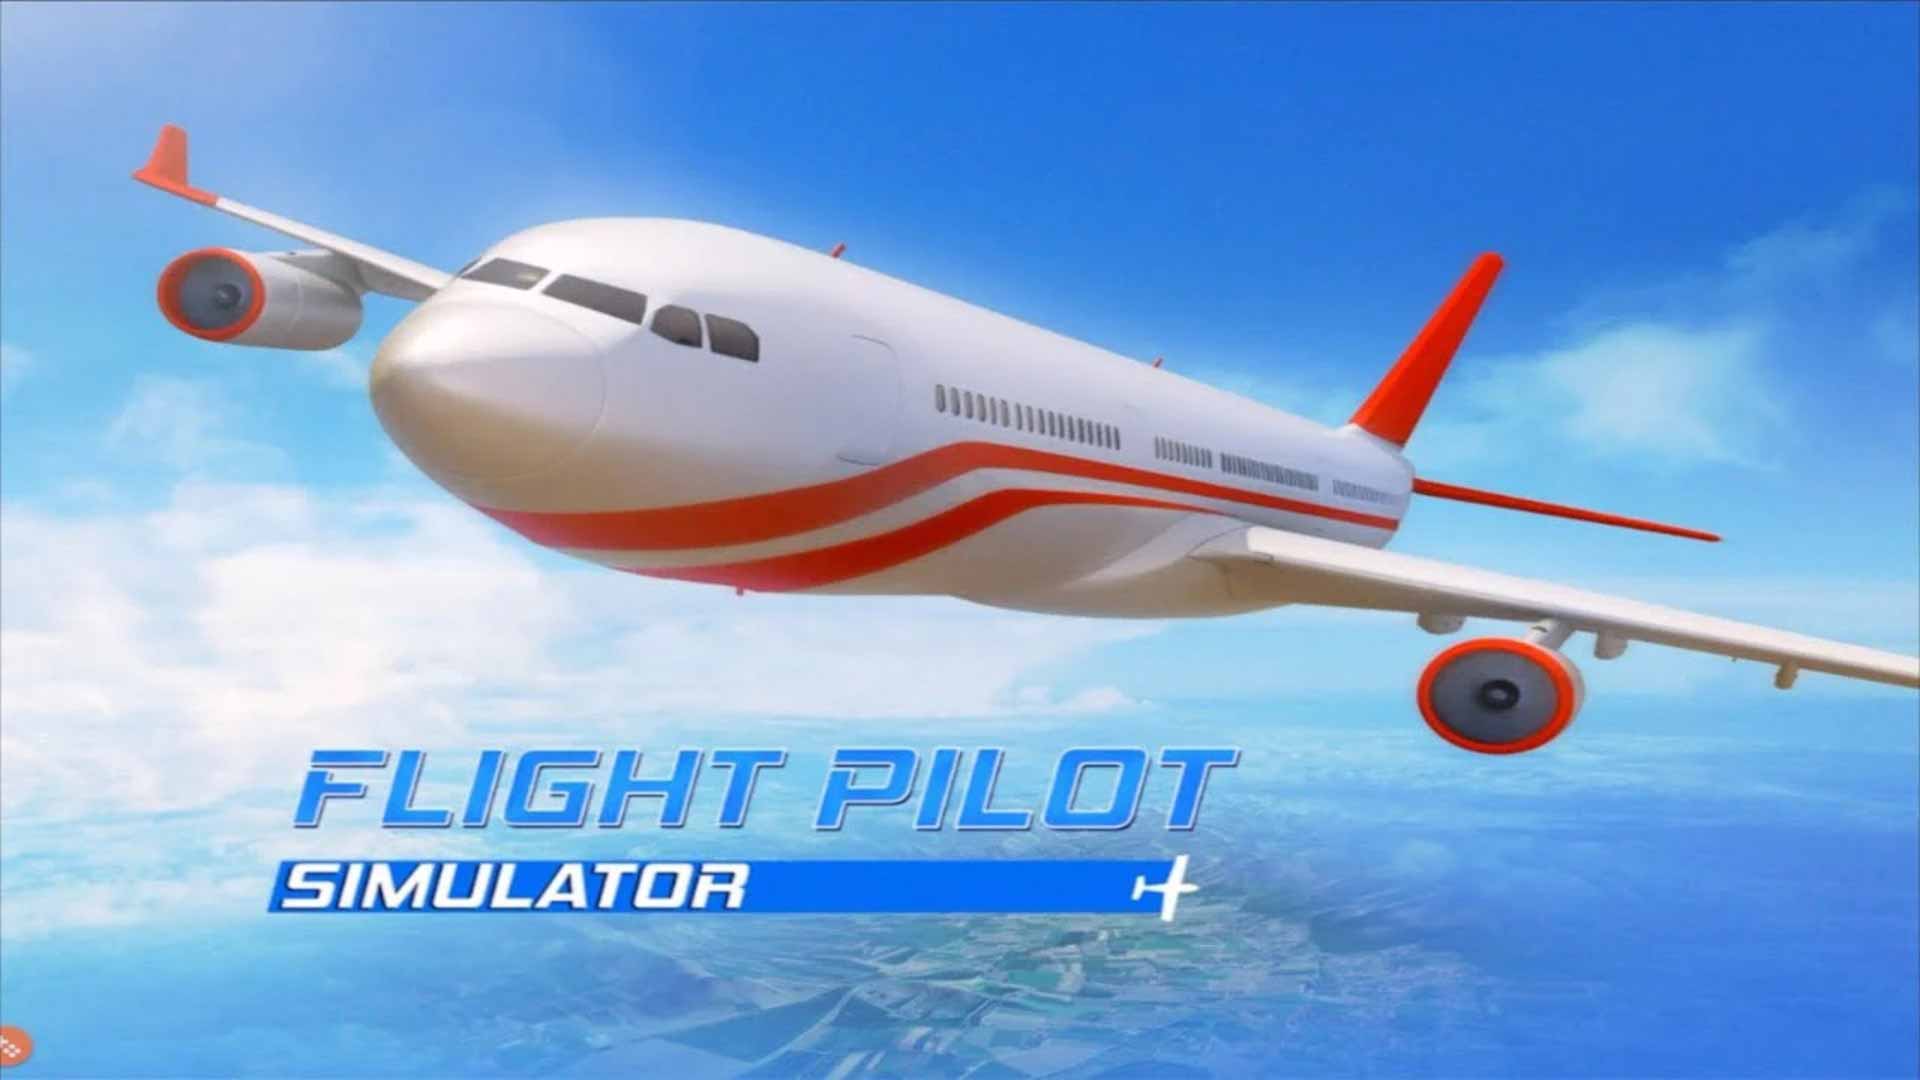 Flight Pilot Simulator android game